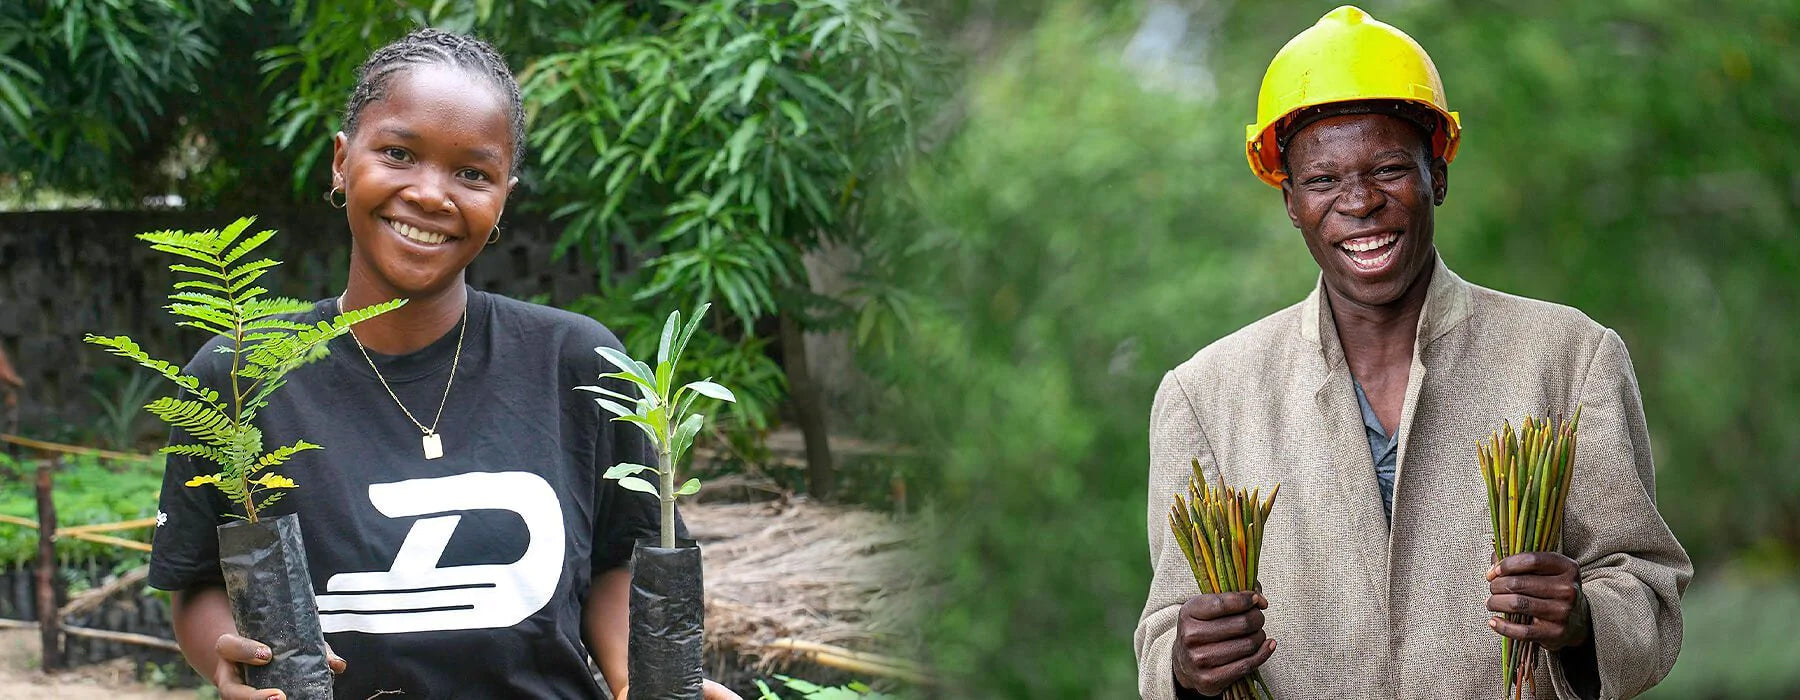 programa do good, dos personas felices reforestando. Bonoboss.cl comprar lentes de sol polarizados y marcos ópticos online